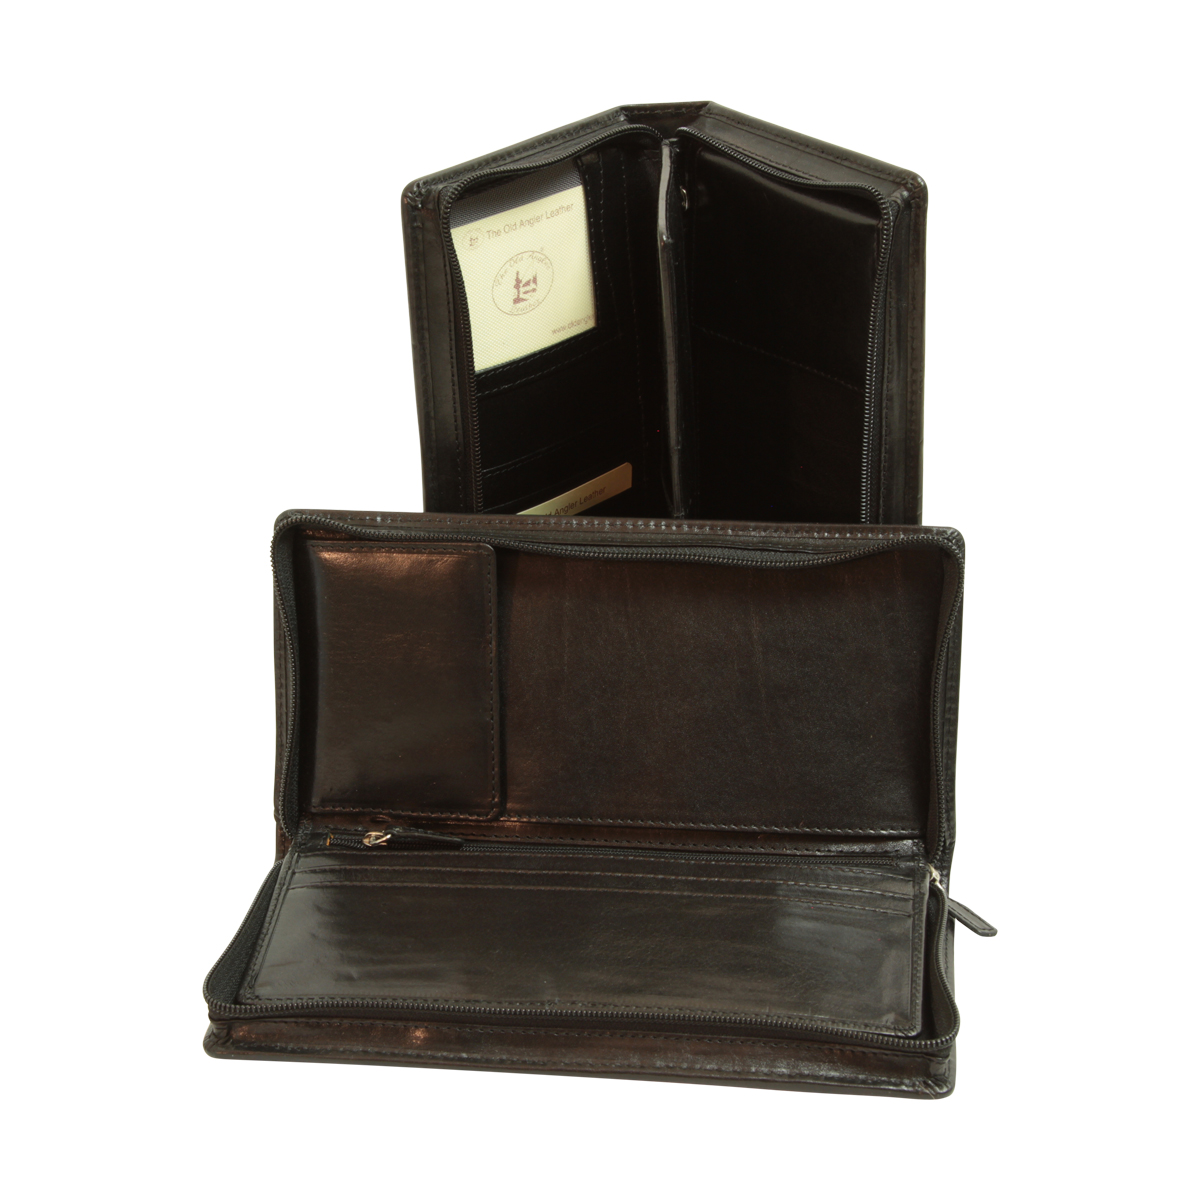 Leather travel wallet - black|506205NE|Old Angler Firenze